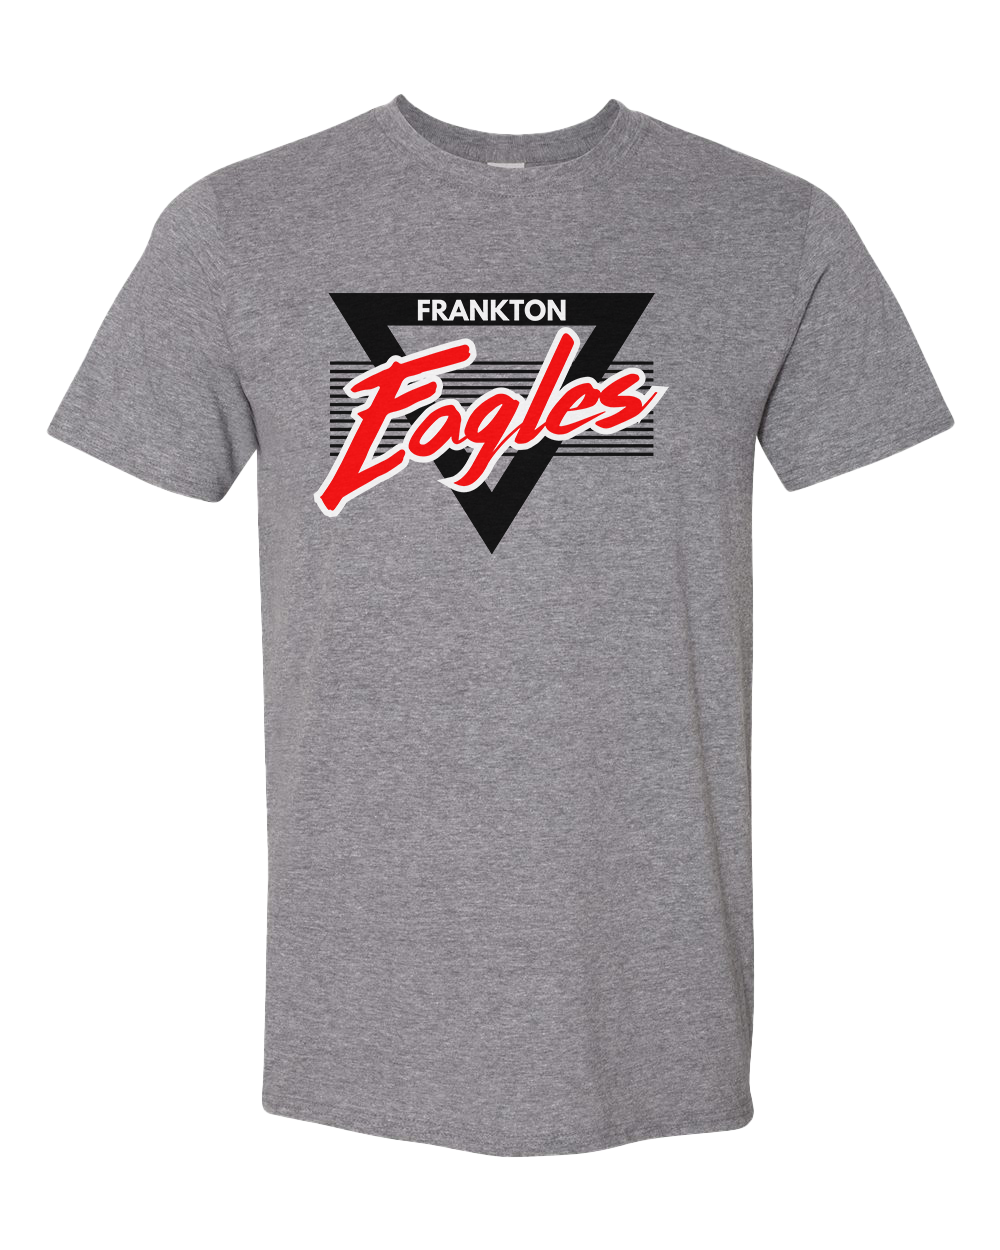 Frankton Eagles Retro 90s Tshirt - Graphite Heather